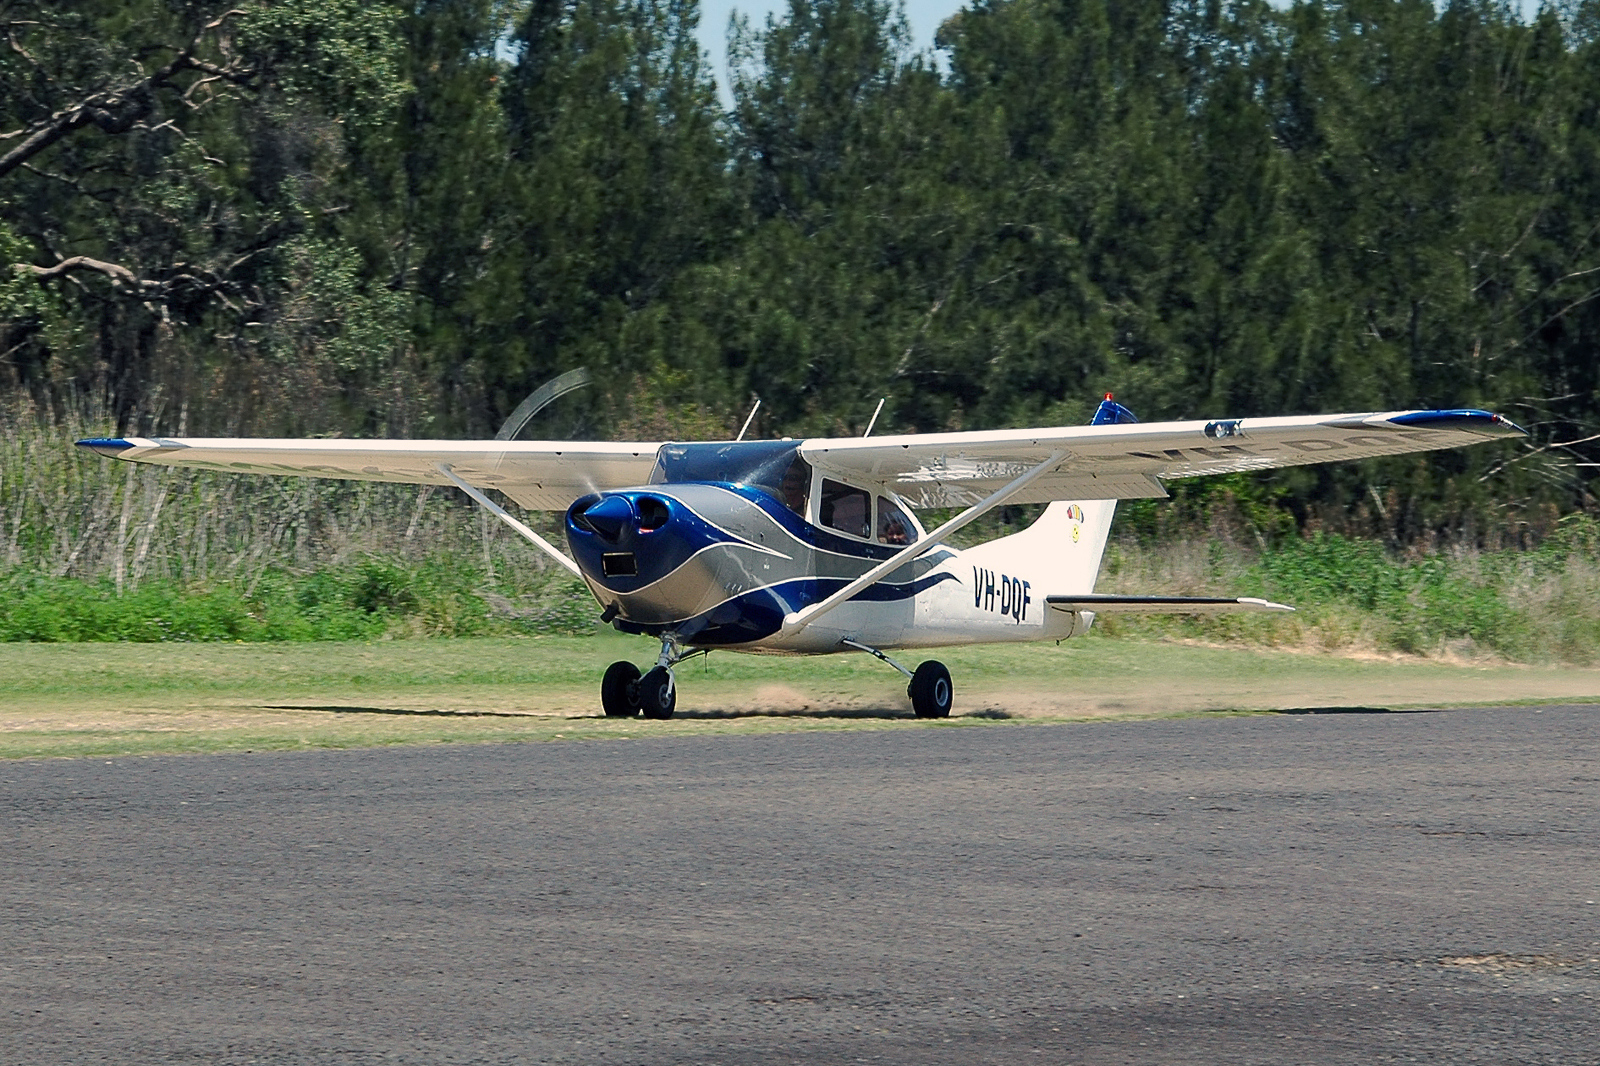 A Cessna 182 similar to the aircraft involved